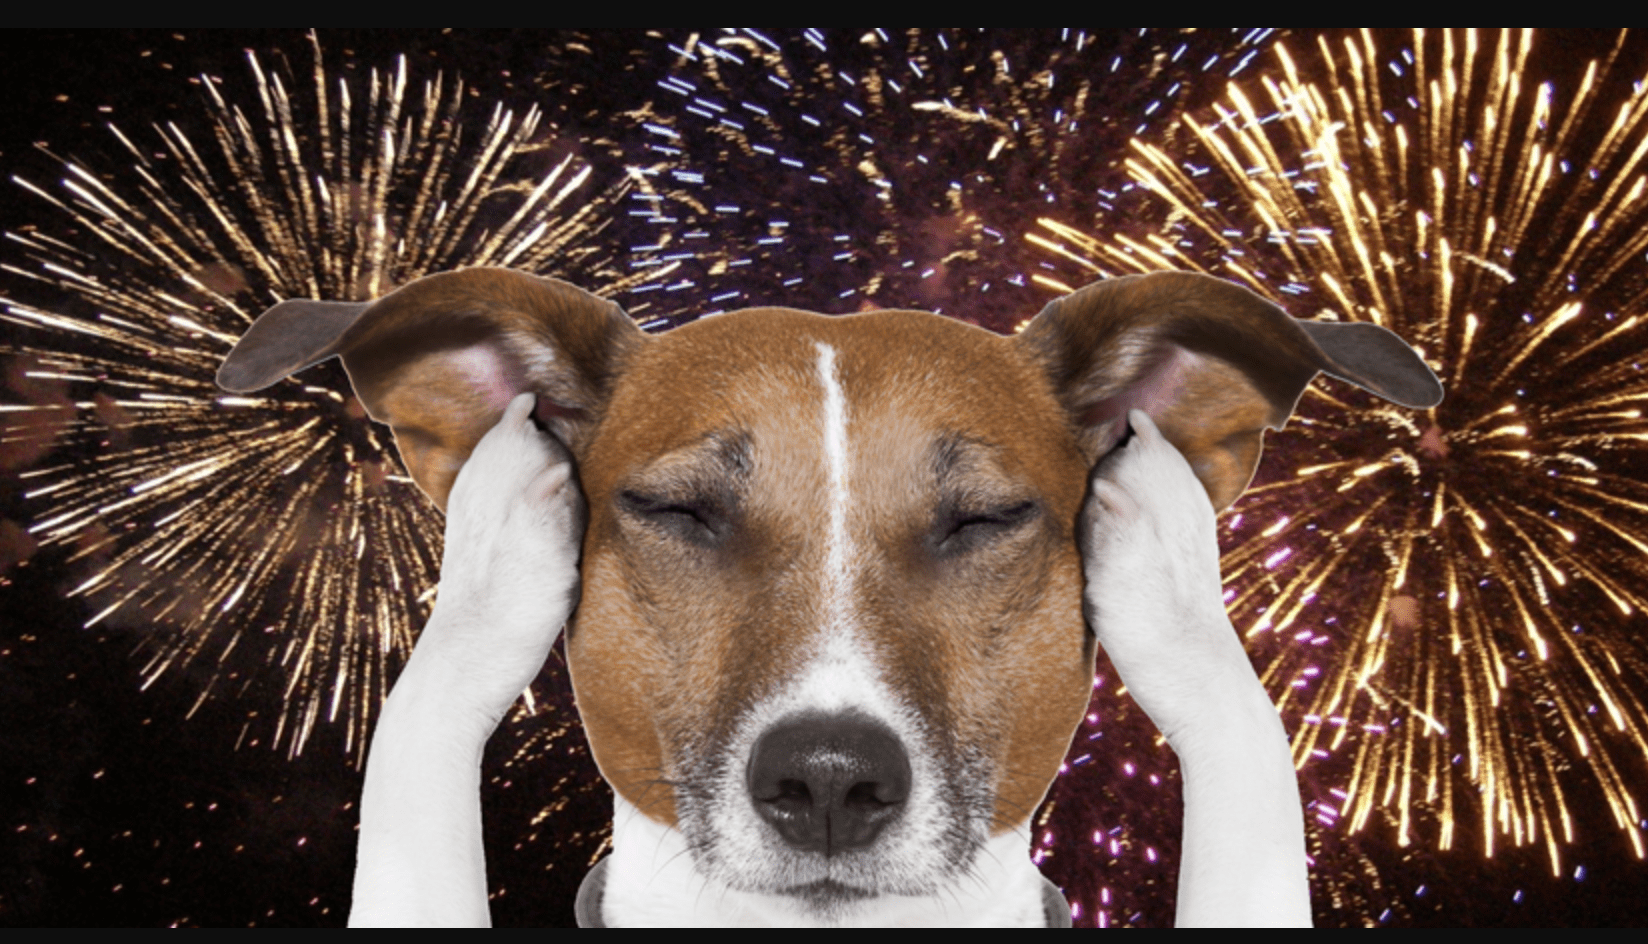 Composite image, dog and fireworks